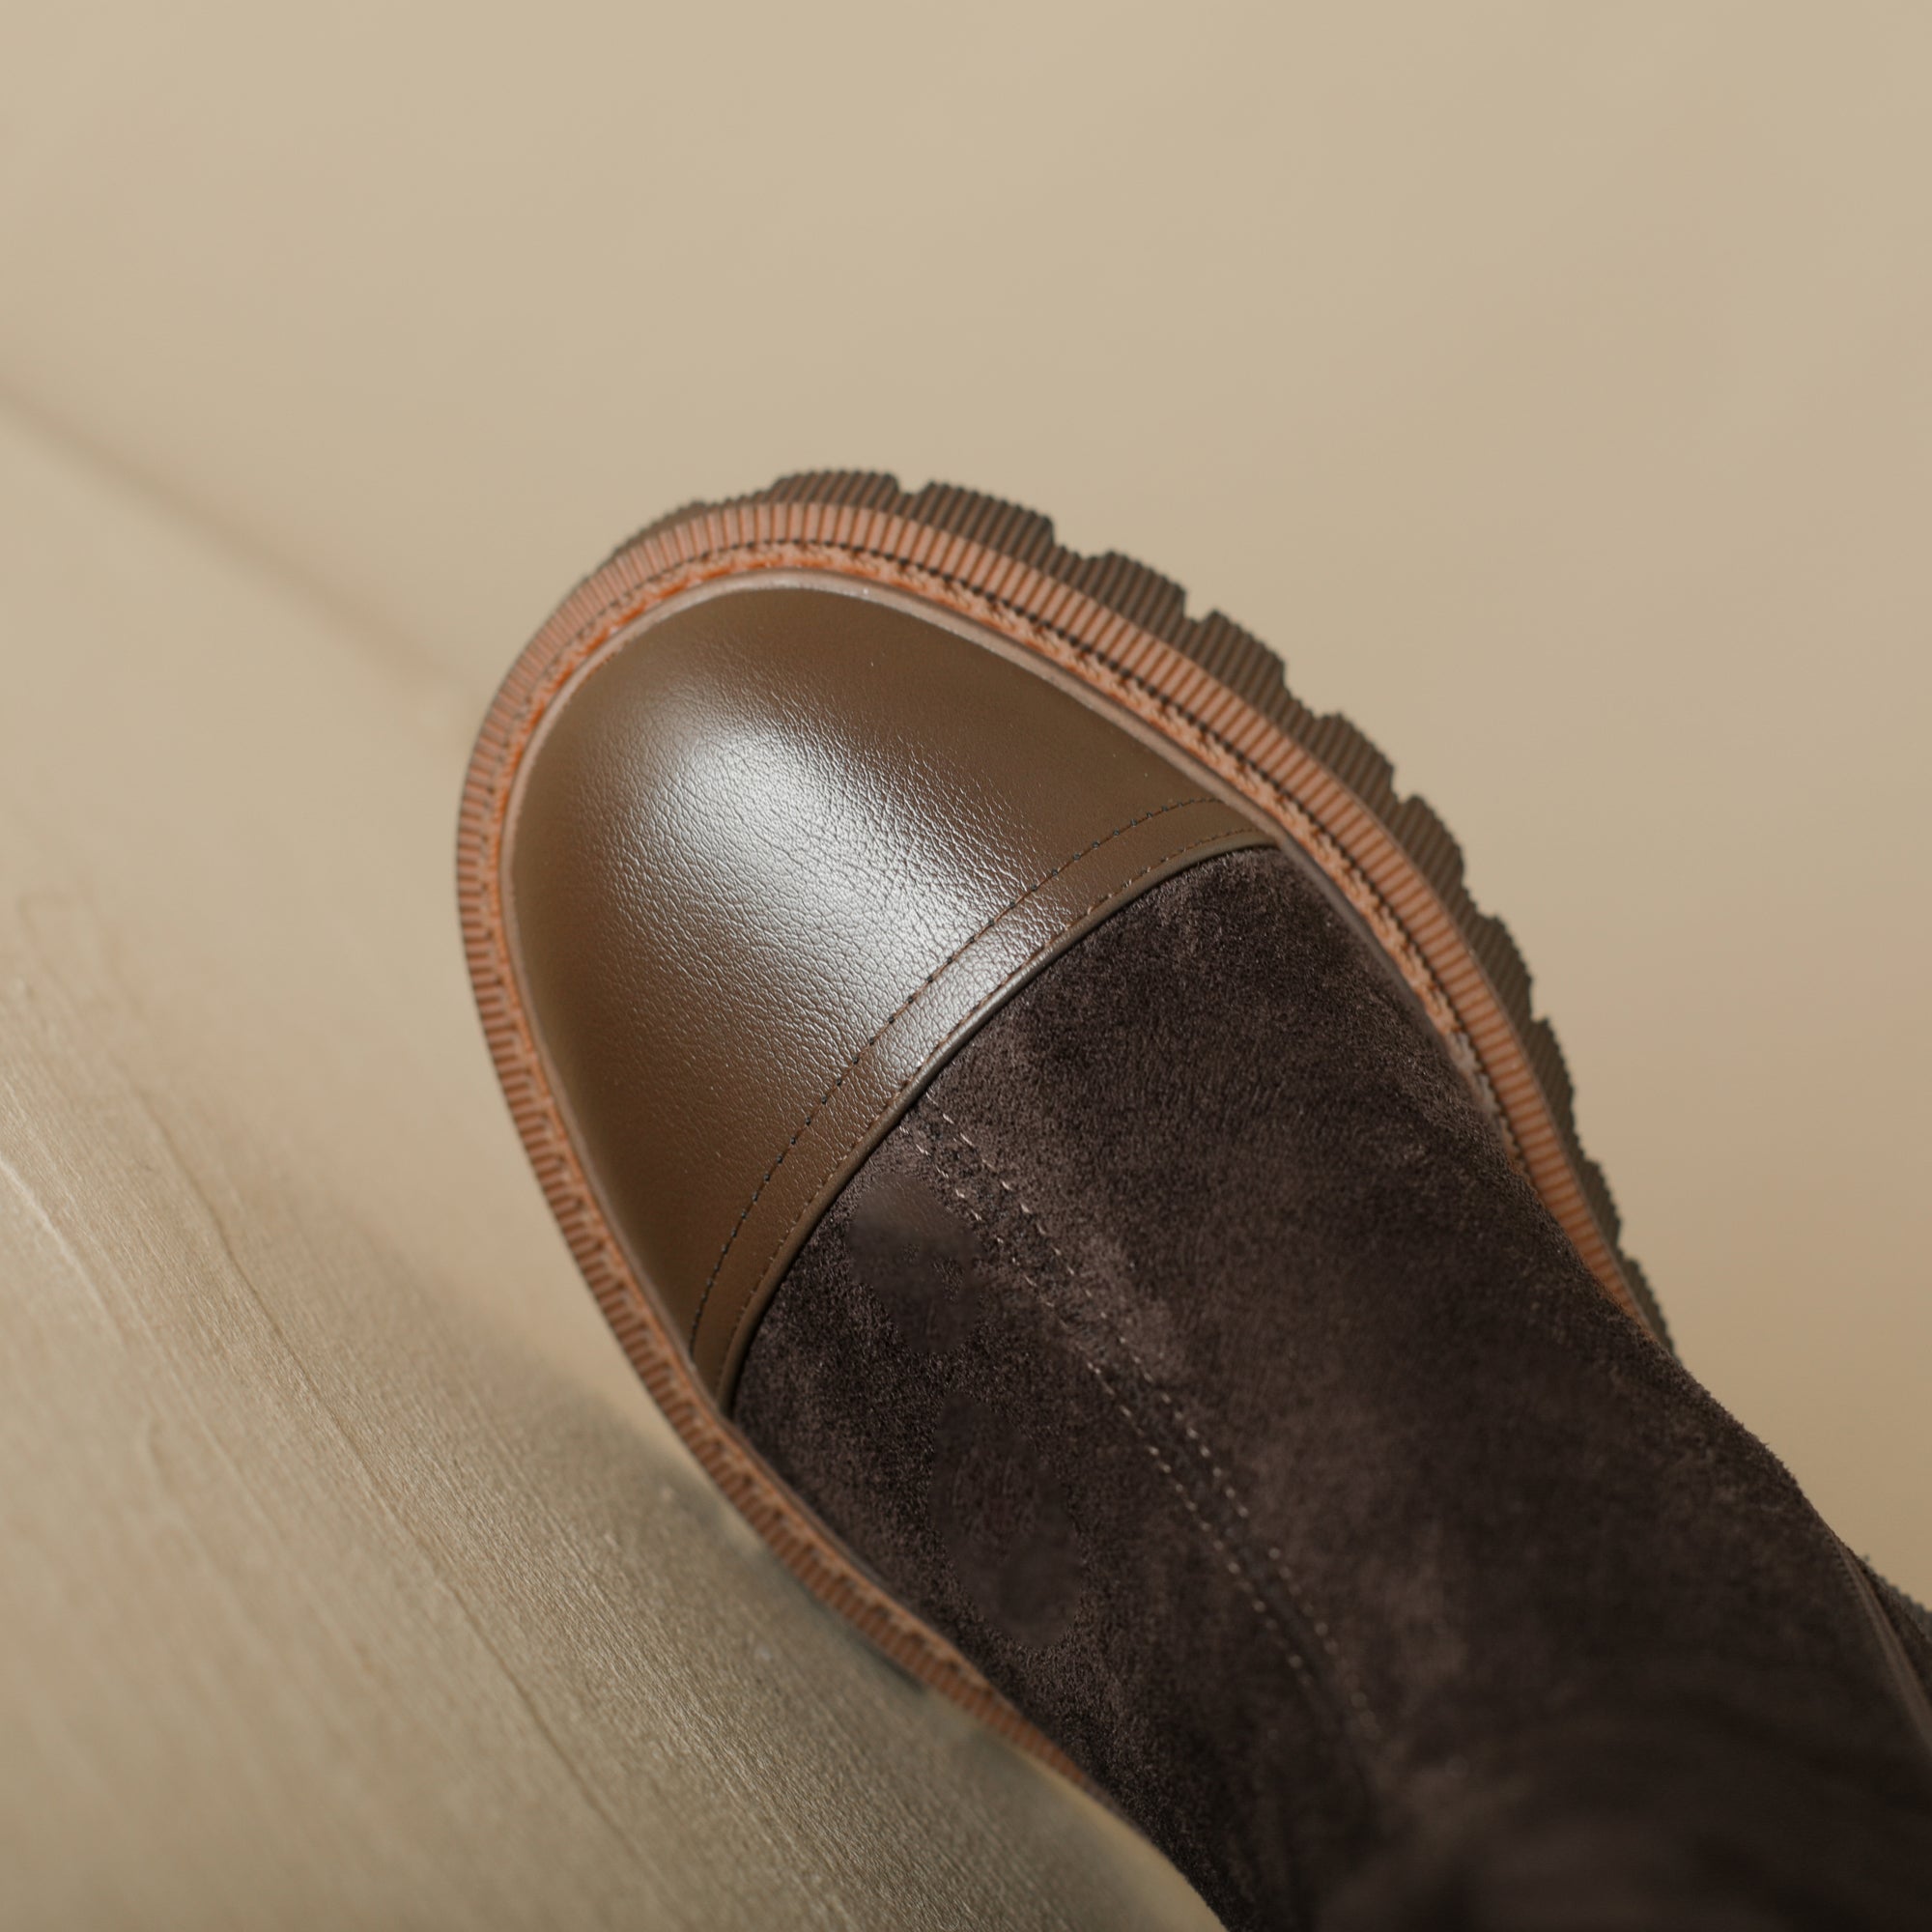 Bigsizeheels French retro elegant round toe boots - Brown freeshipping - bigsizeheel®-size5-size15 -All Plus Sizes Available!